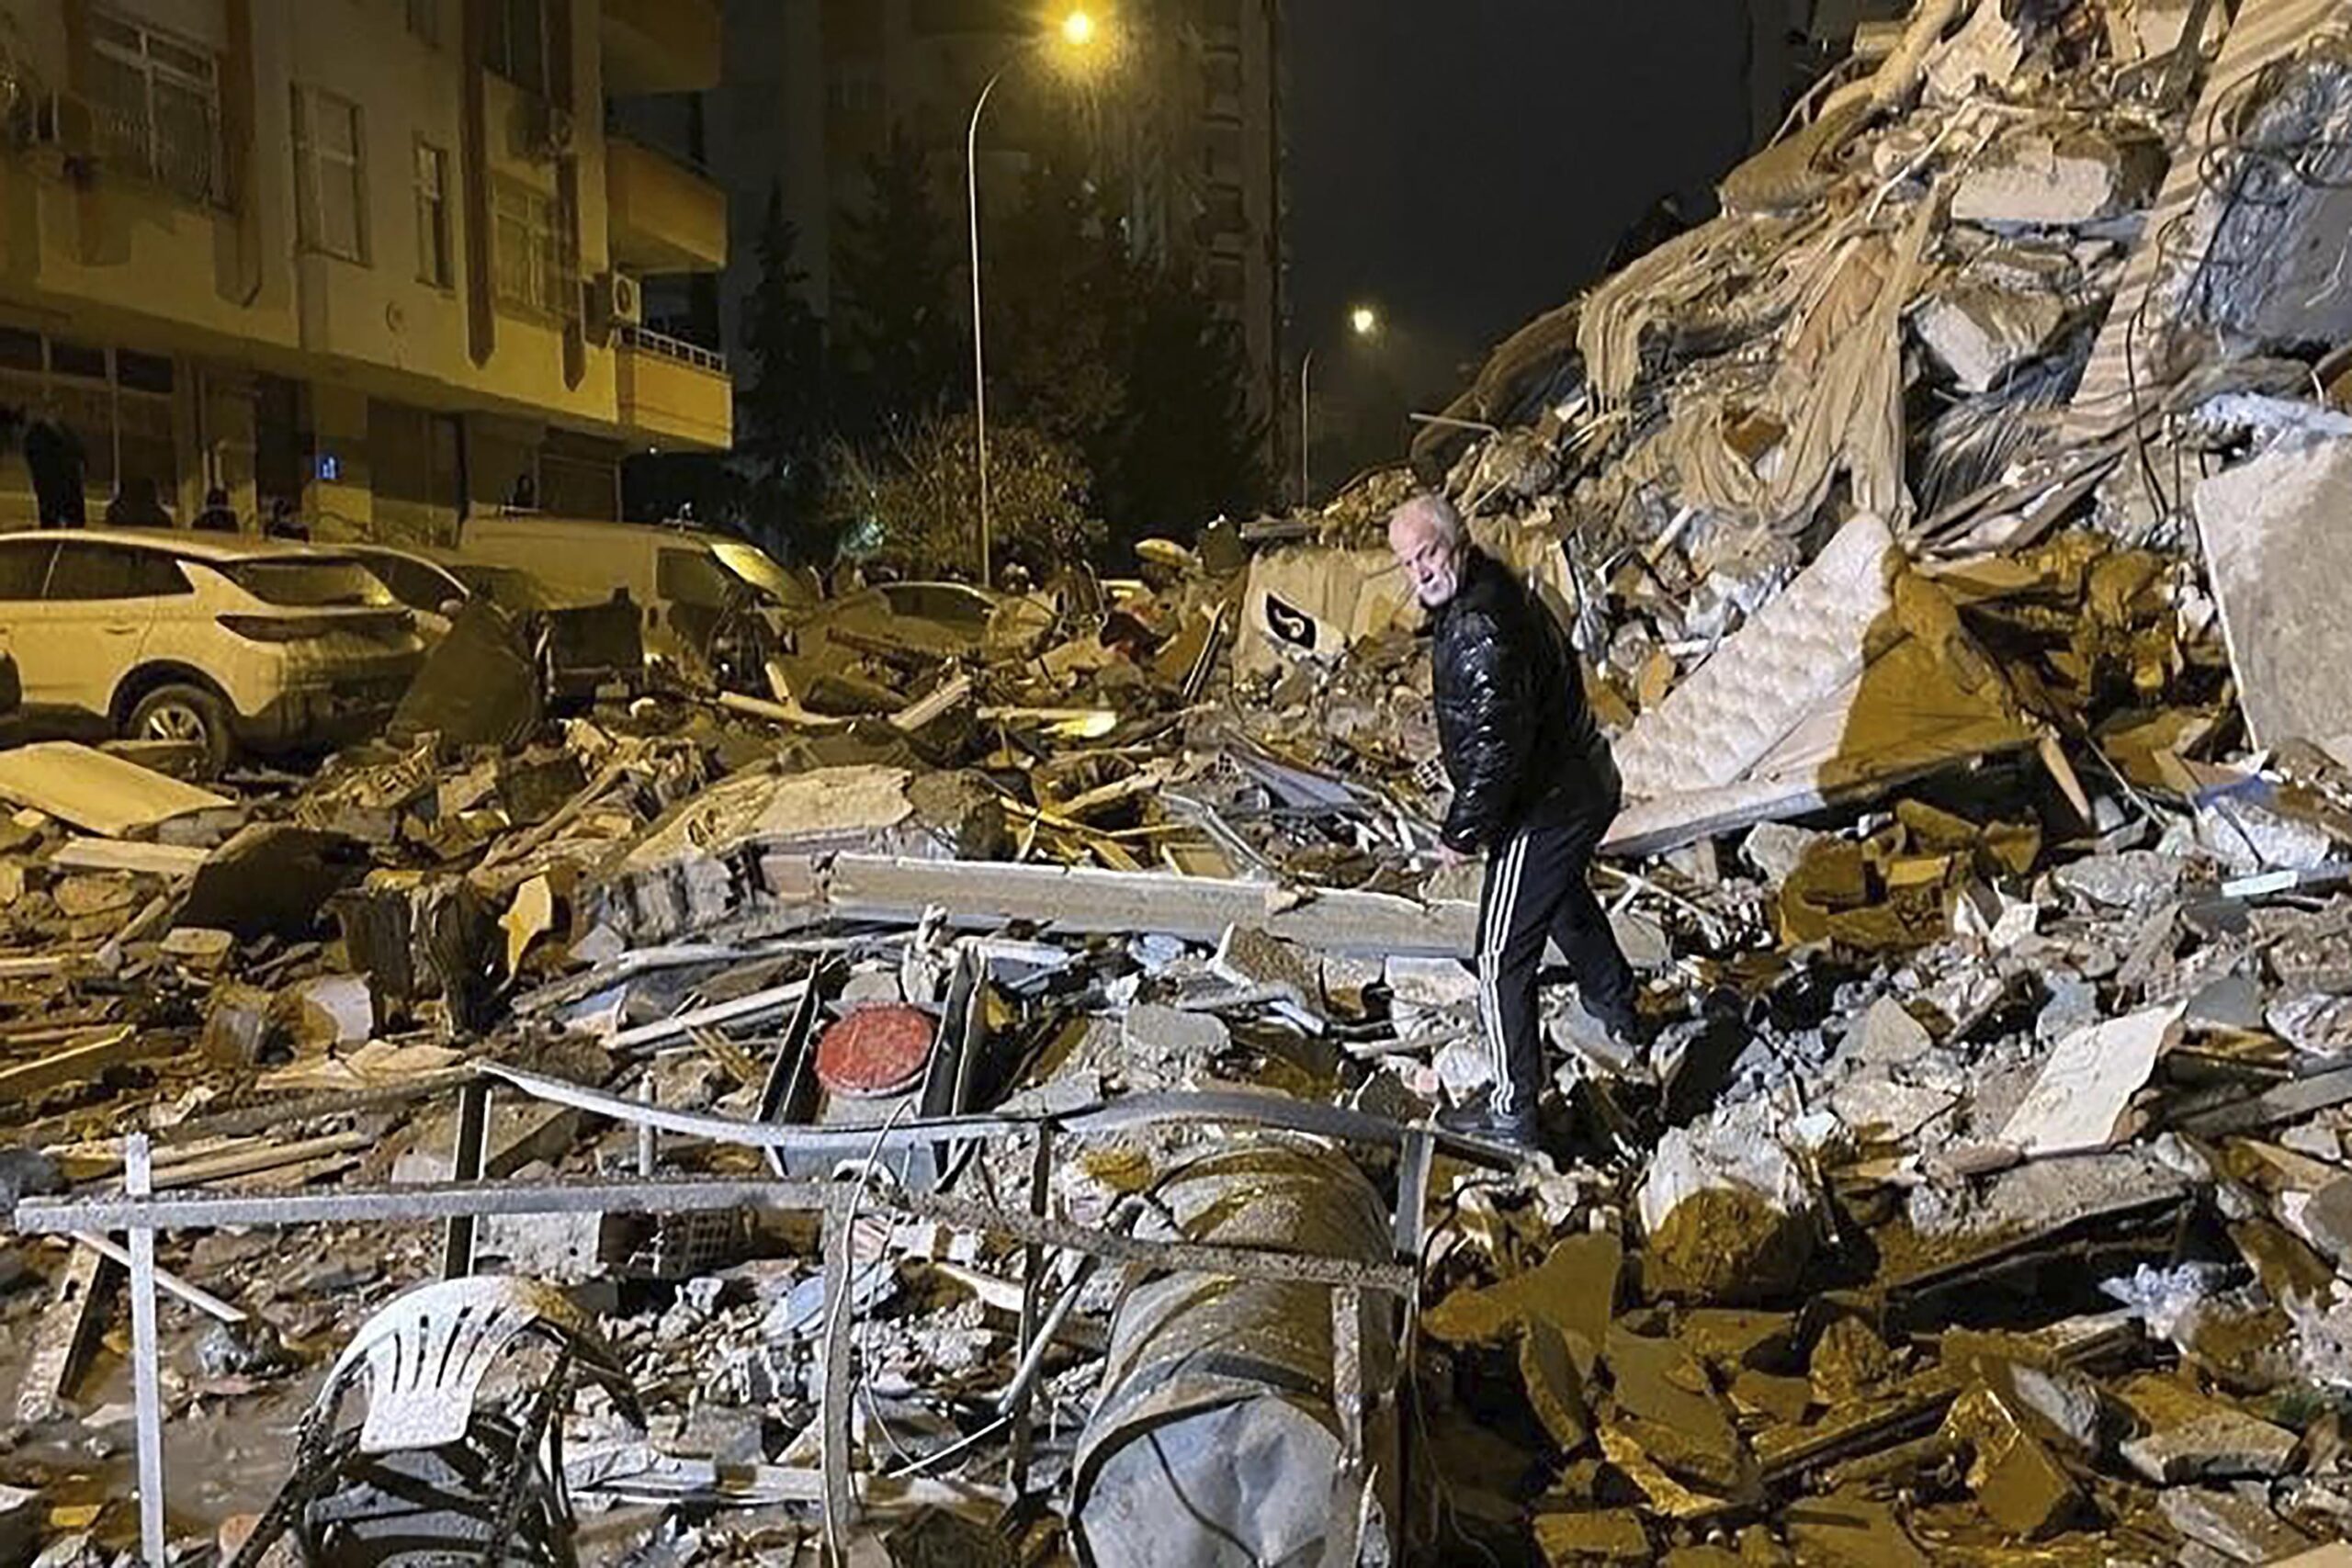 7.8 magnitude earthquake kills more than 200 people in Turkey, Syria